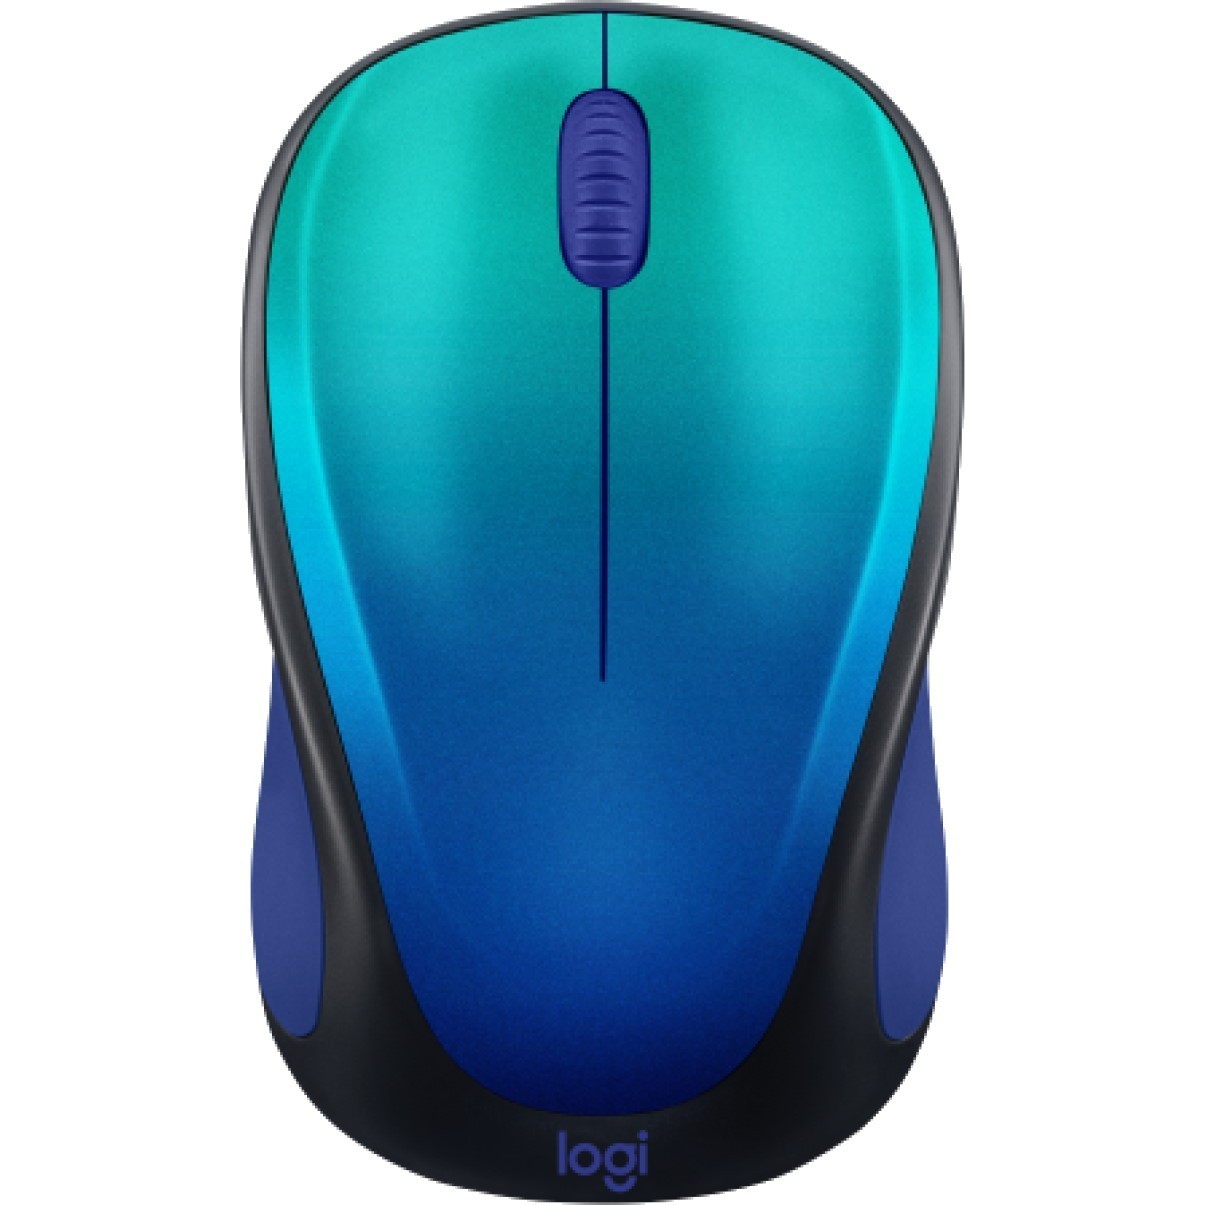 Logitech collection. Logitech мышь беспроводная m190 Black/Blue. Logitech Aurora Mouse. Logitech Limited Edition. Мышка Логитек. Синяя.